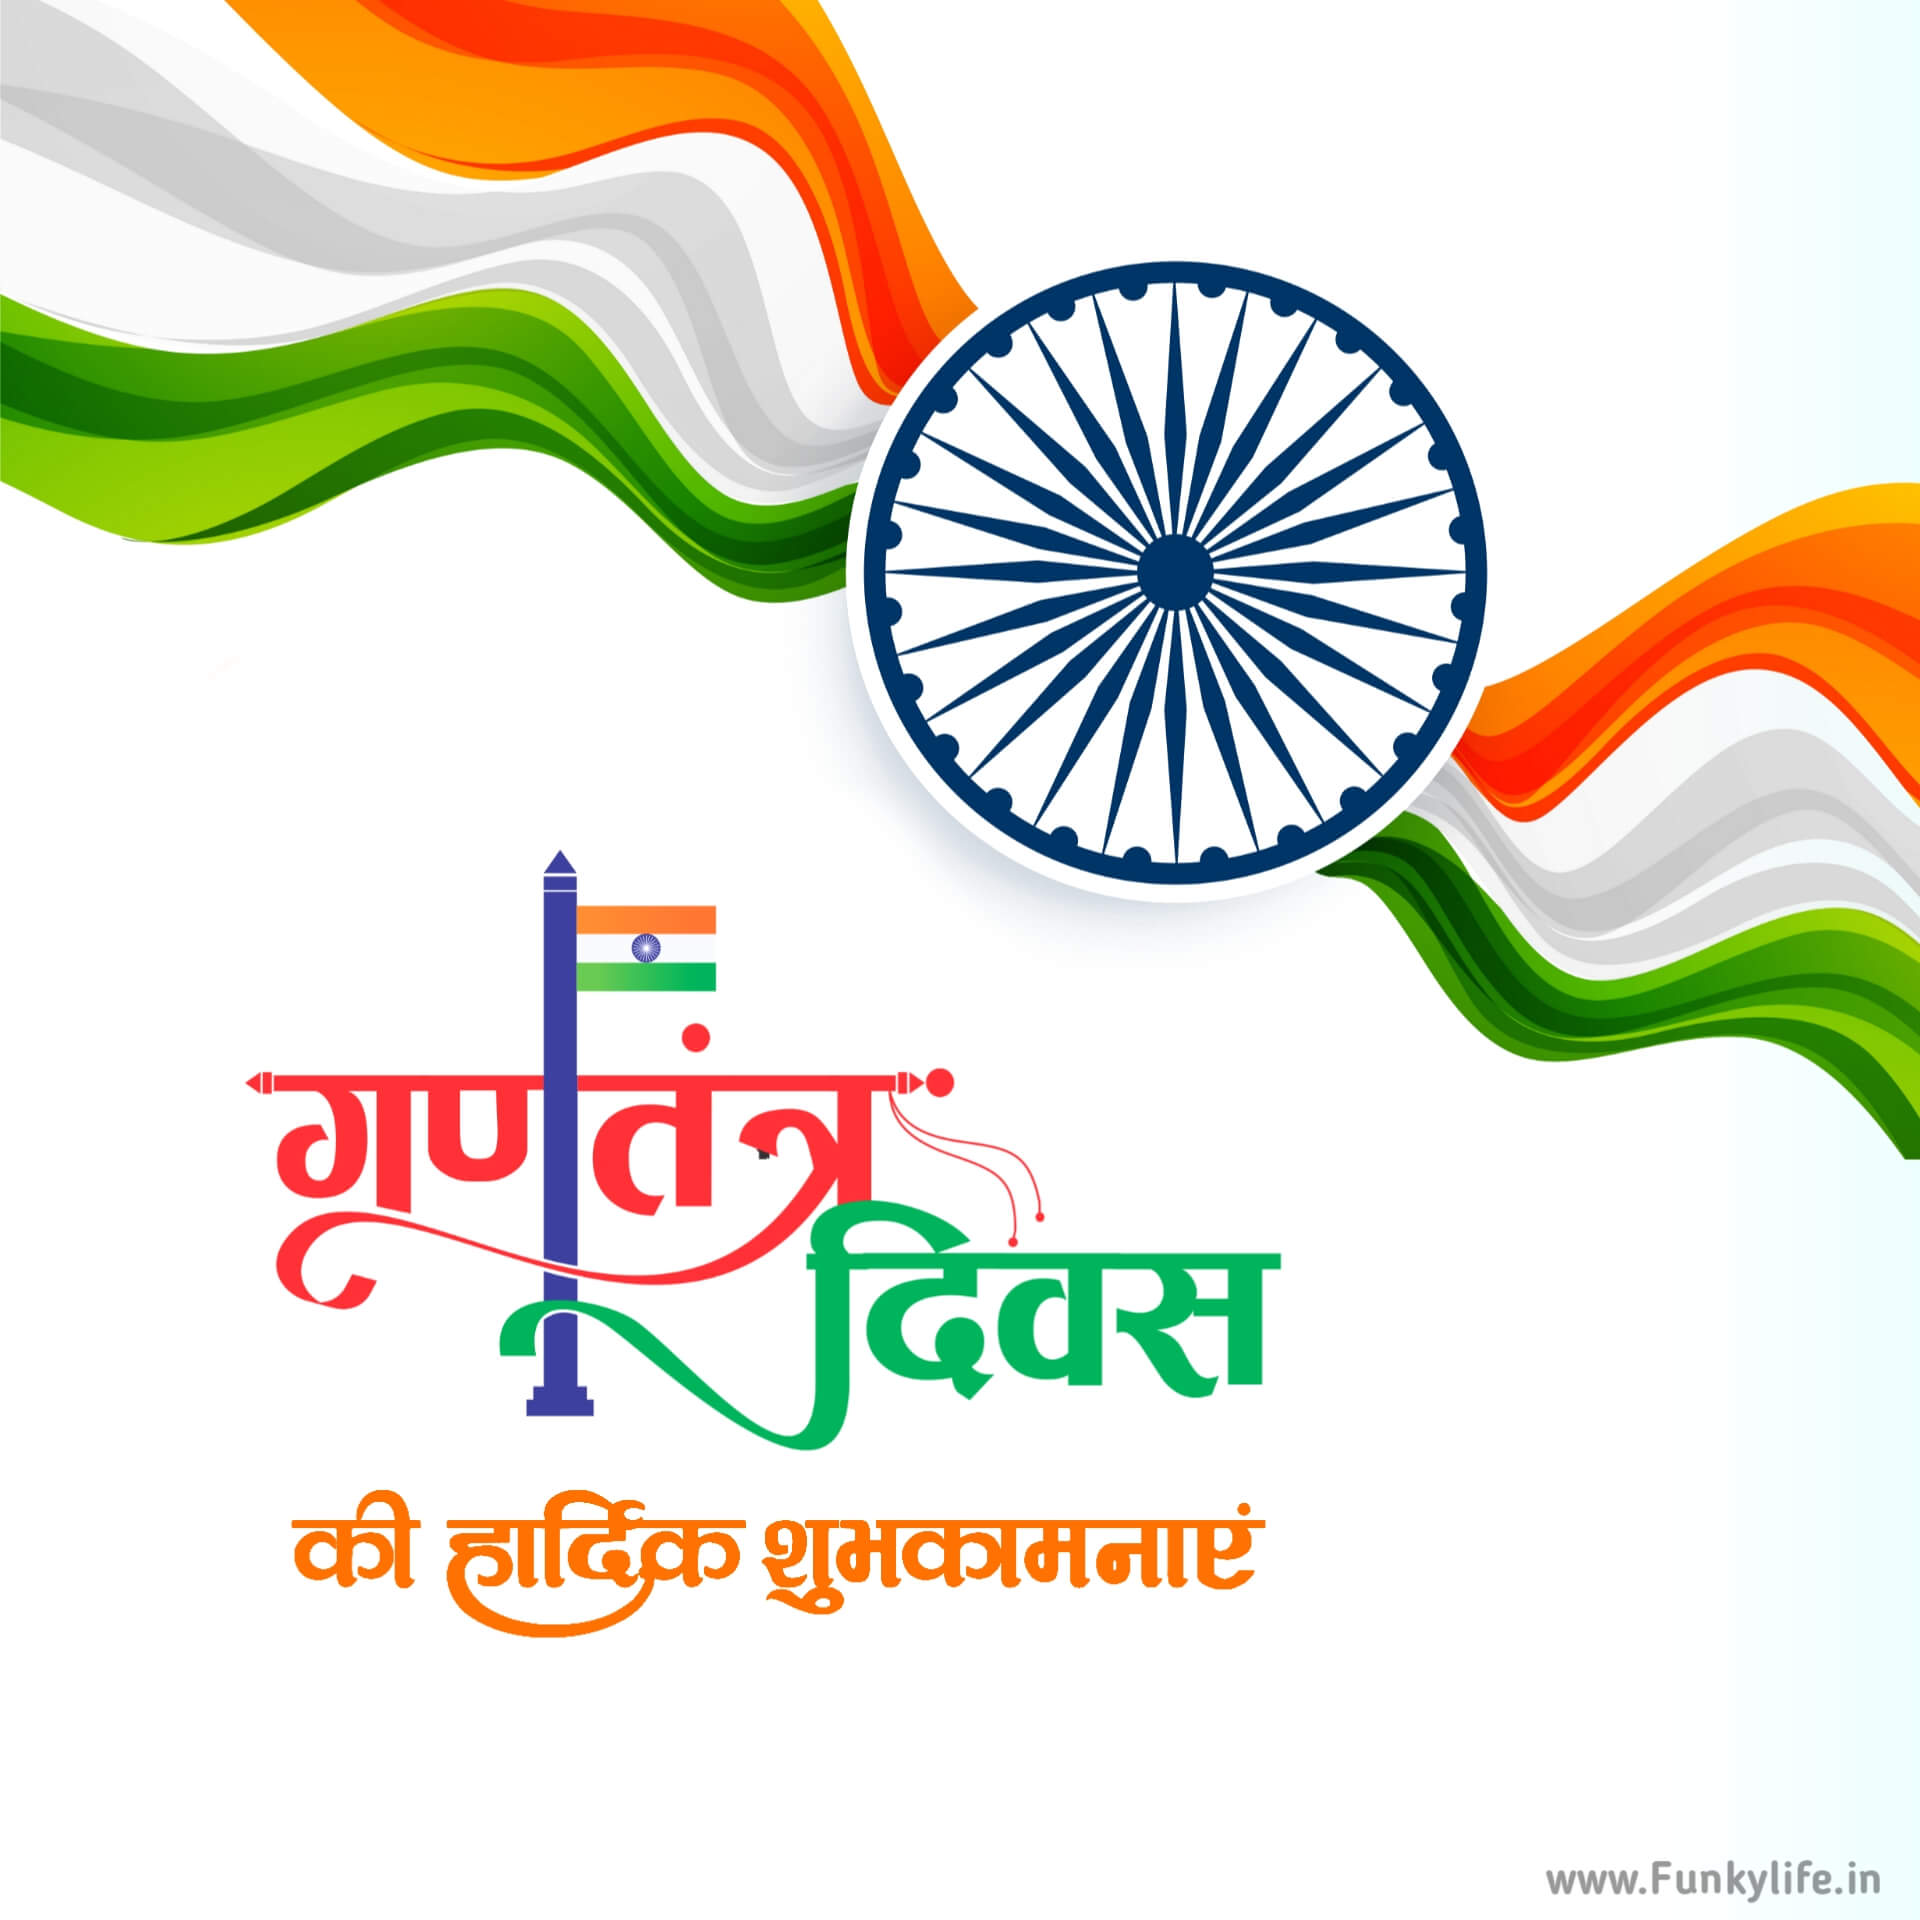 Hindi Republic Day Images